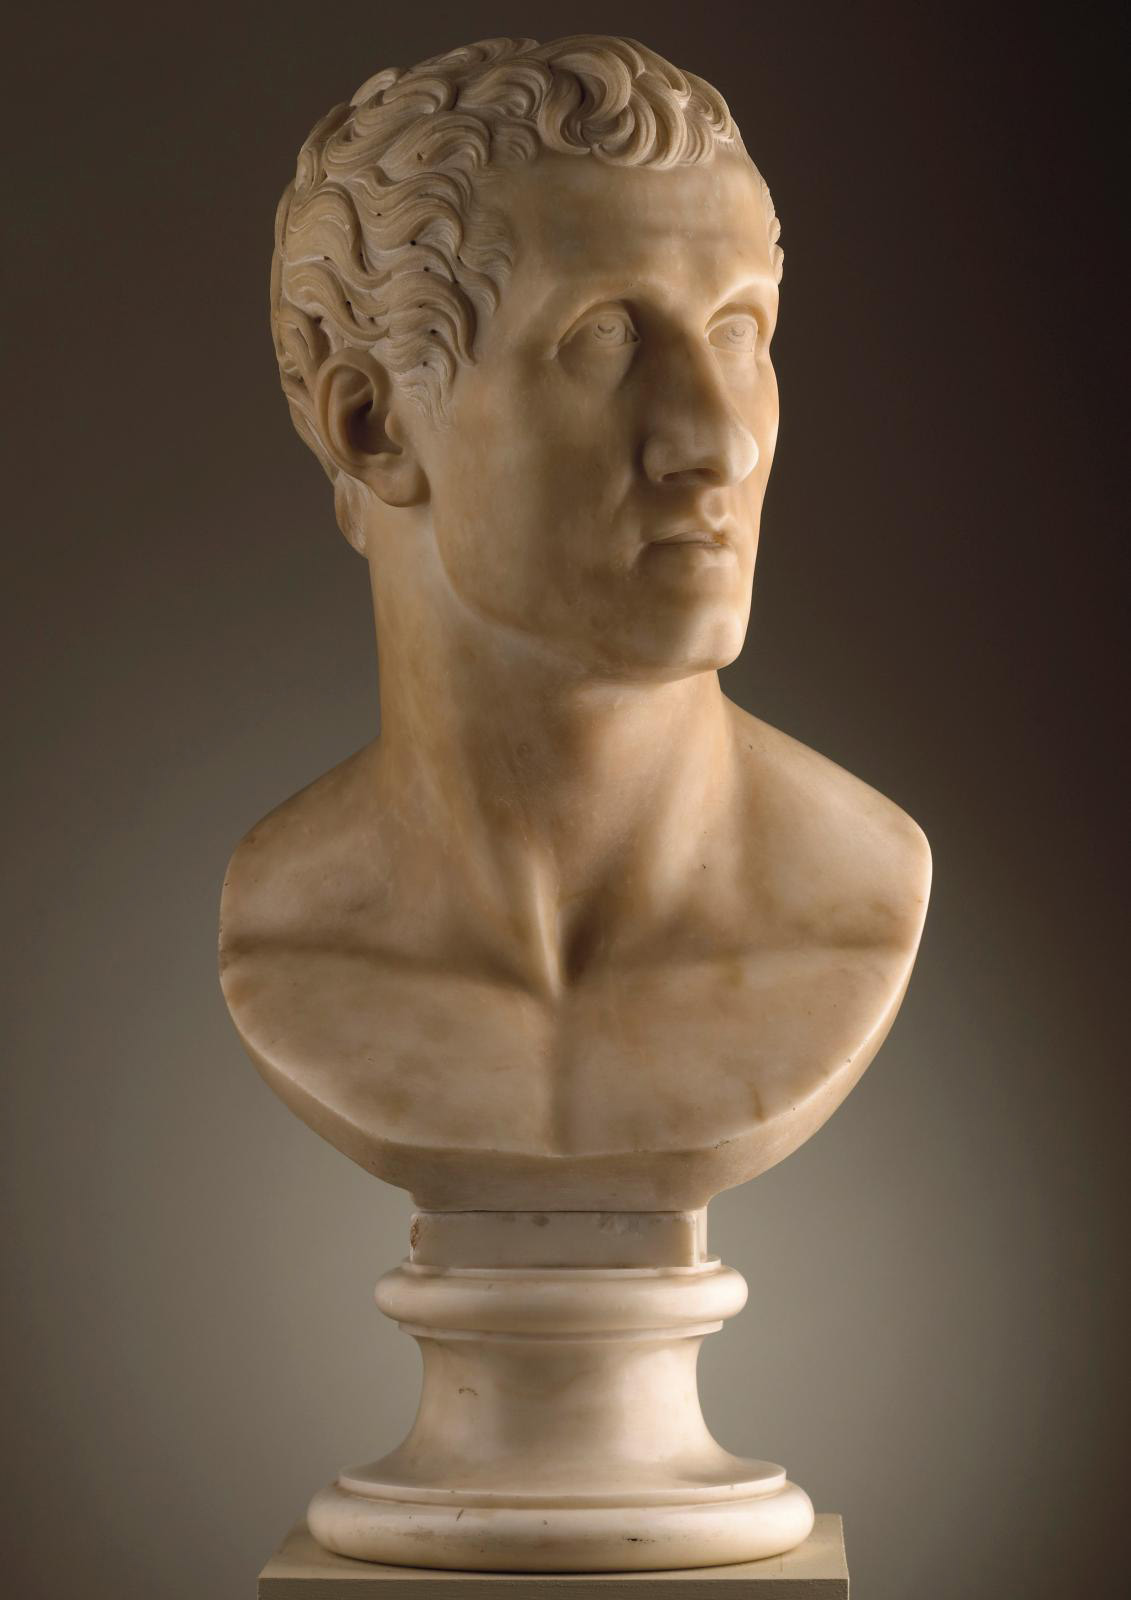 Raimondo Trentanove (1792-1832), Antonio Canova, 1817, marble, 60.5 x 23.5 x 29 cm/23.81 x 9.2 x 11.41 in. Robilant + Voena gallery.